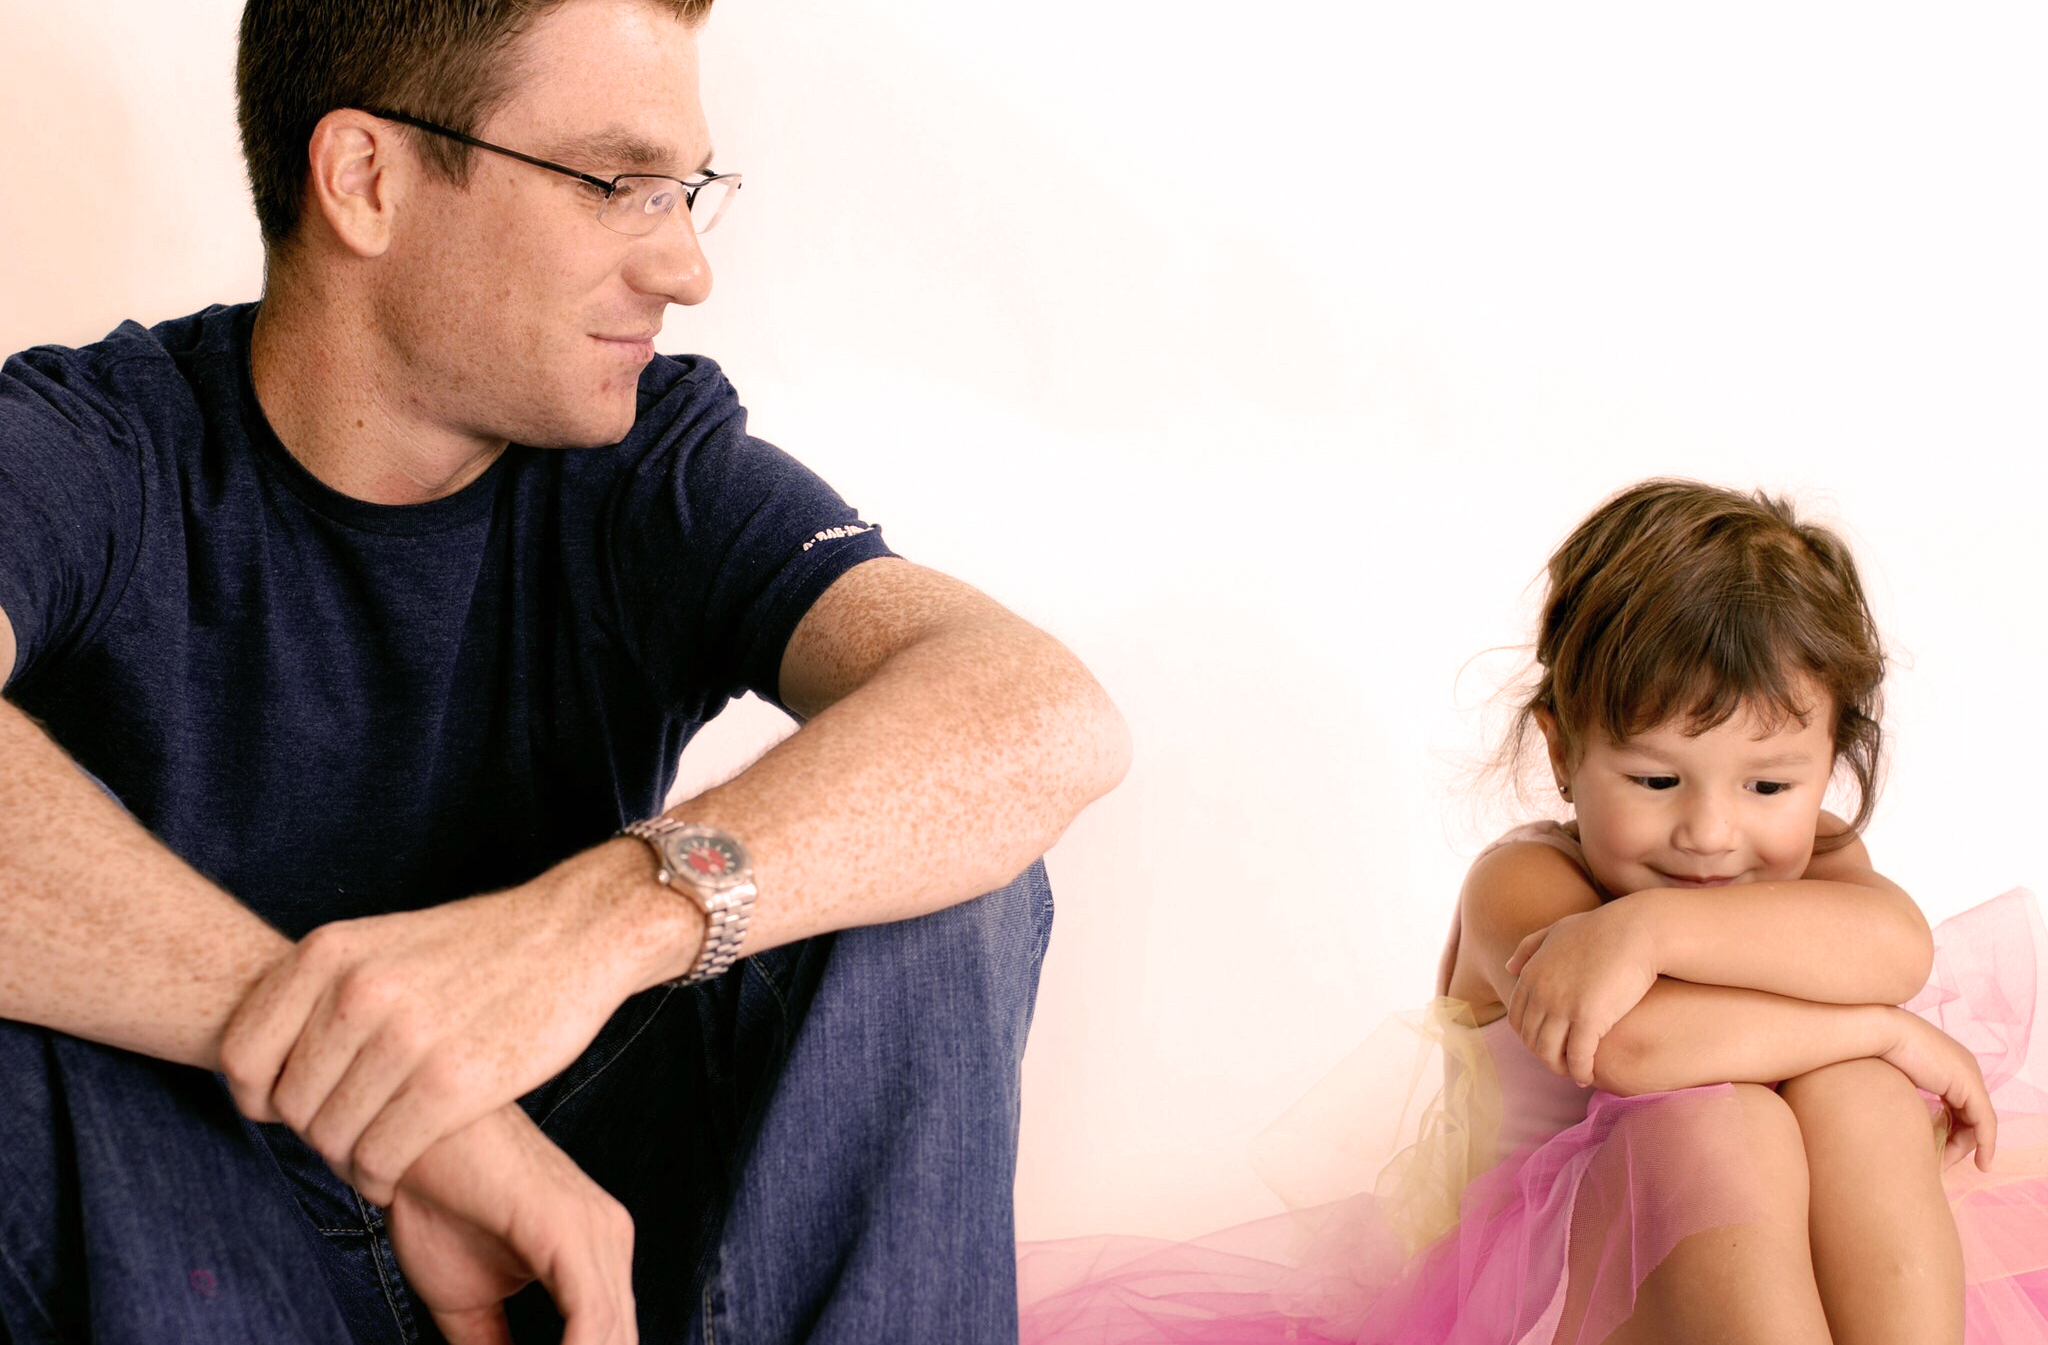 parent child parenting discipline how to advice